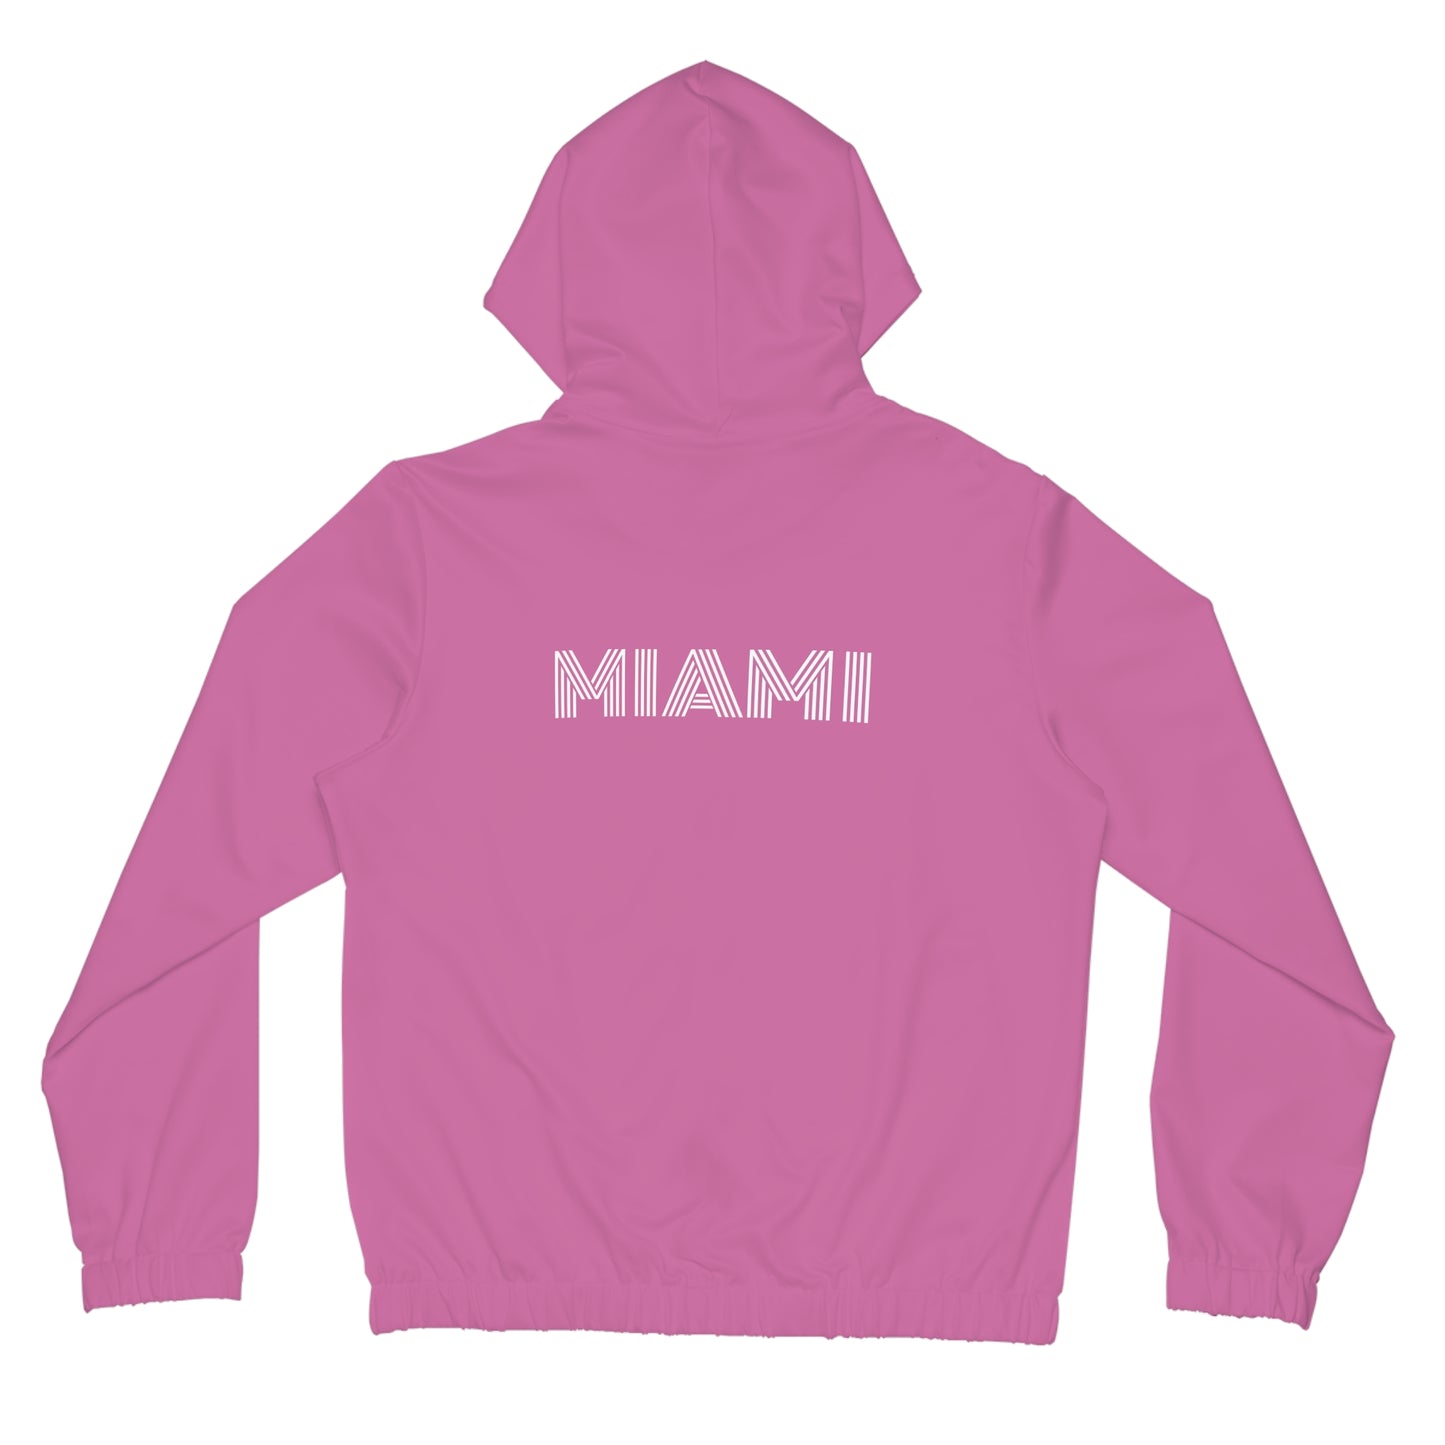 MIAMI Women’s Full-Zip Hoodie, Pink